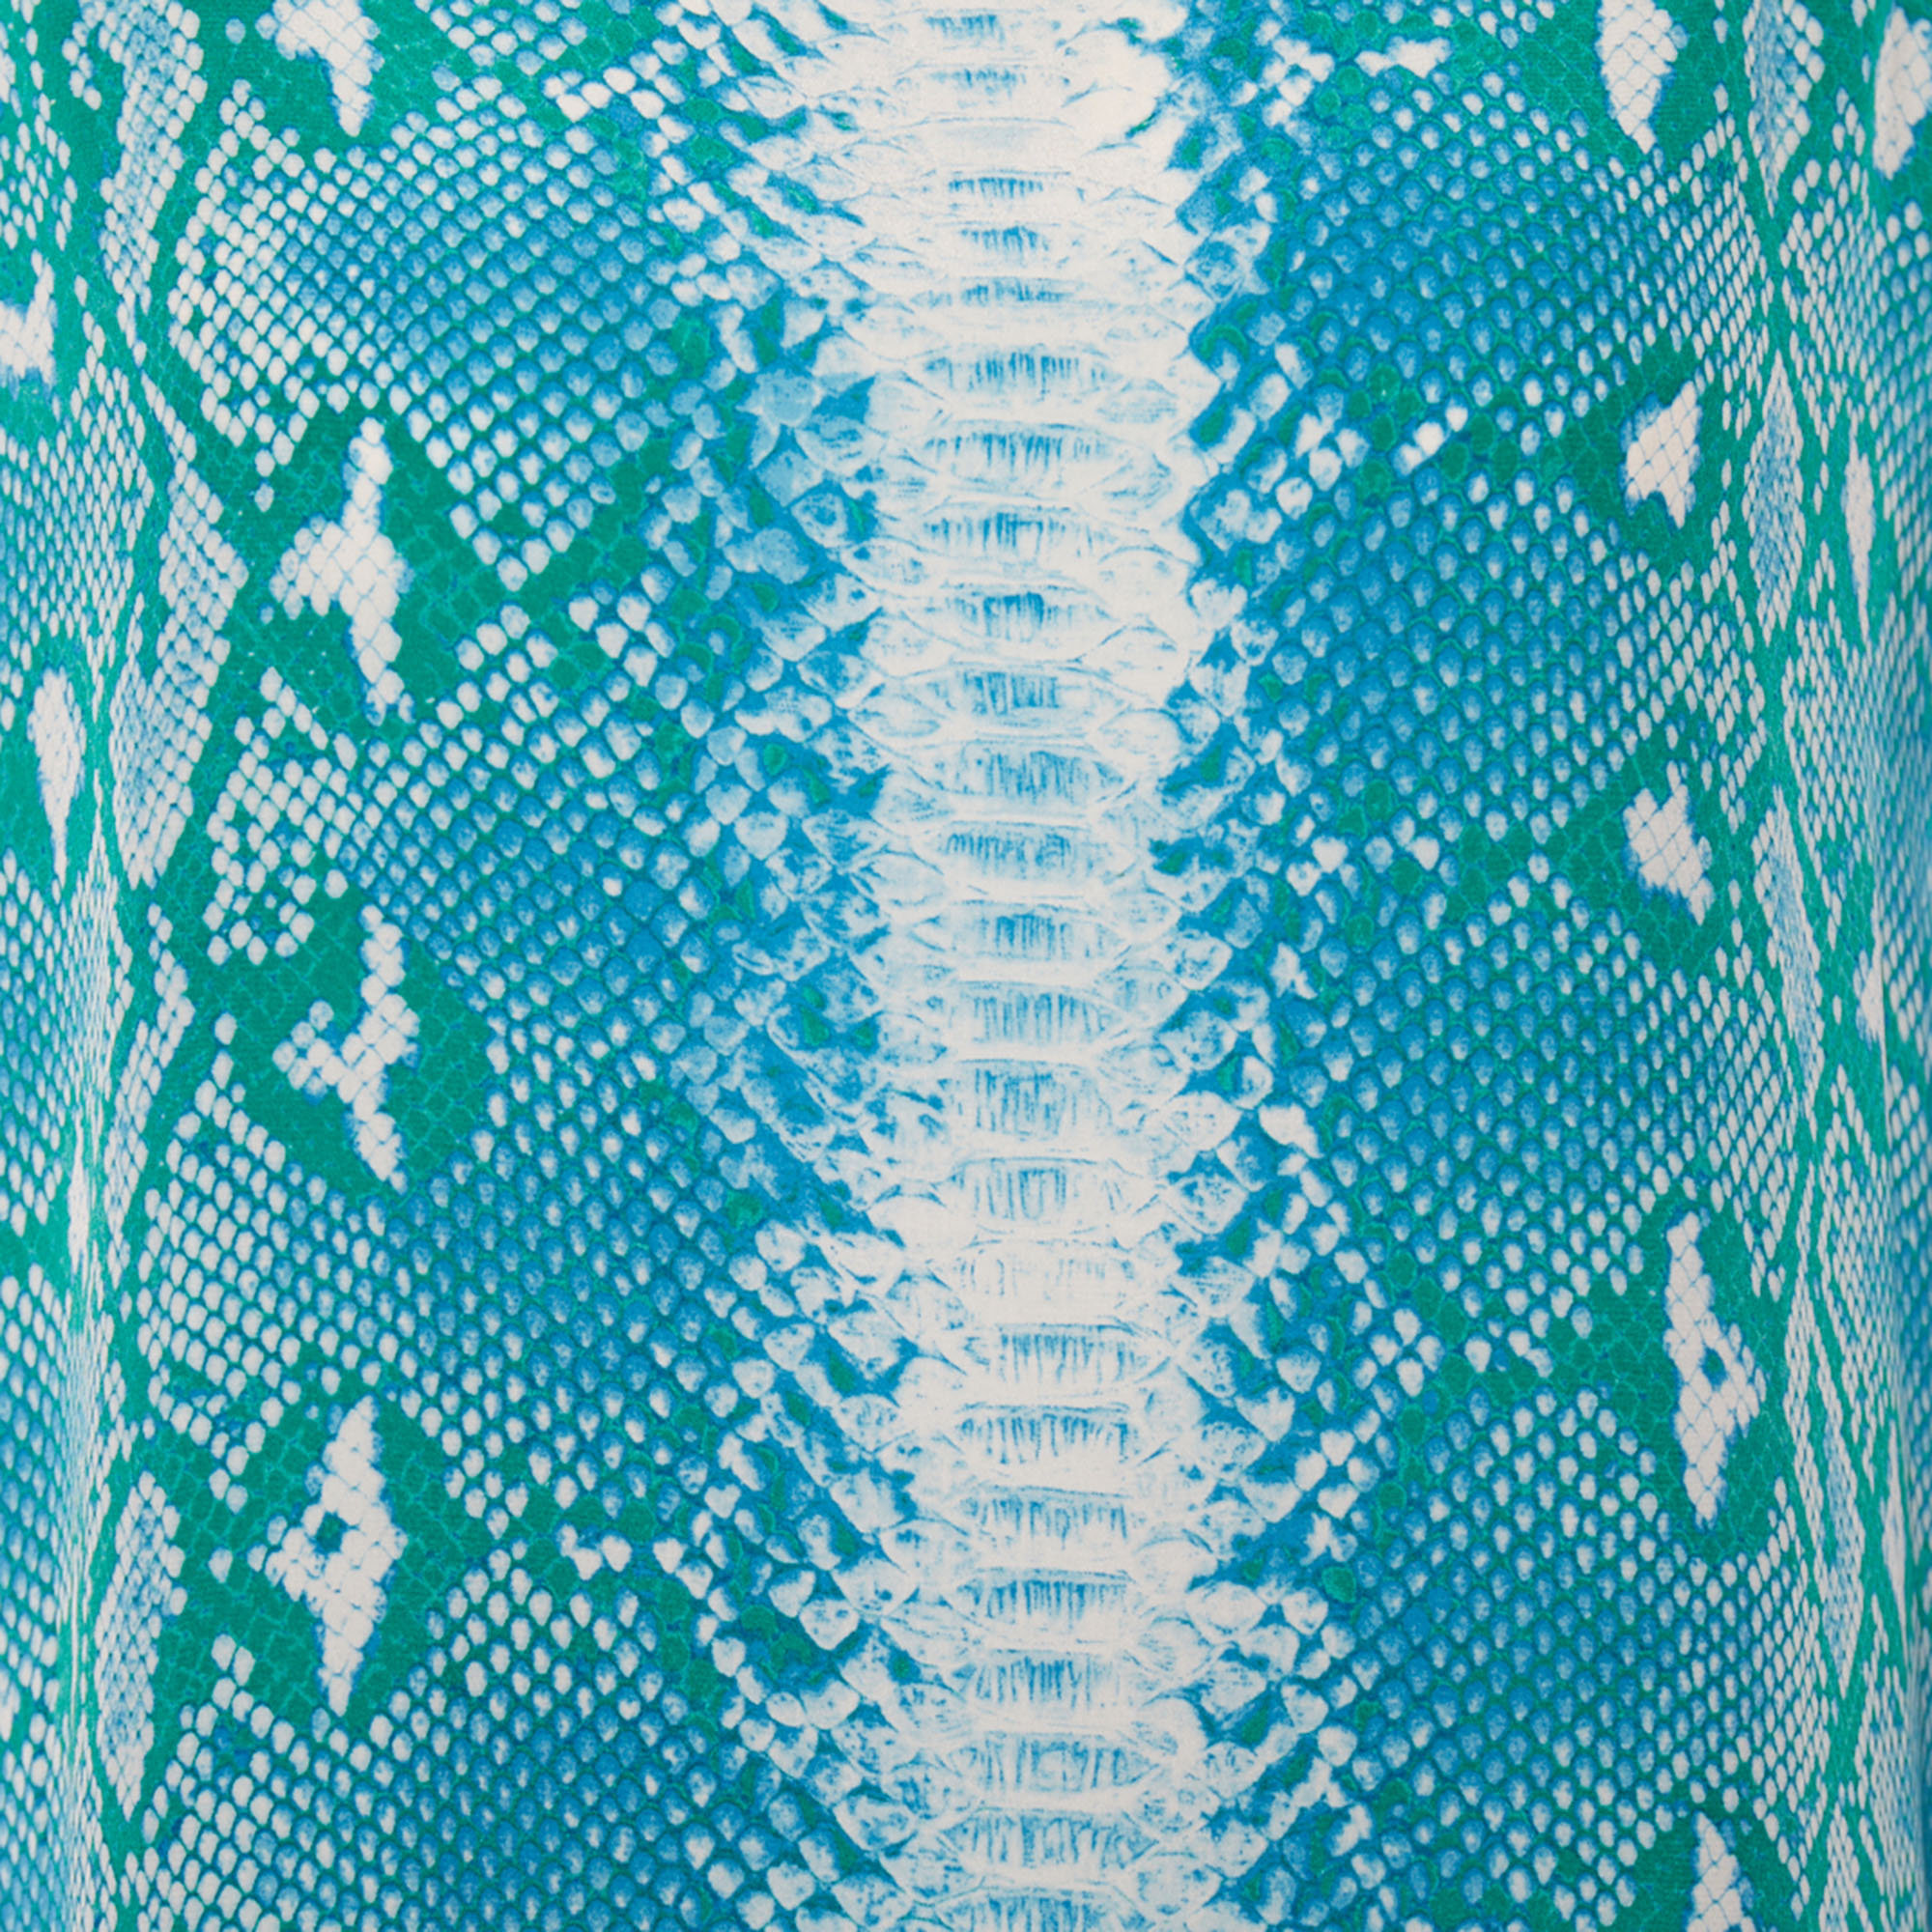 Joseph Blue Snake Printed Silk Shift Dress S